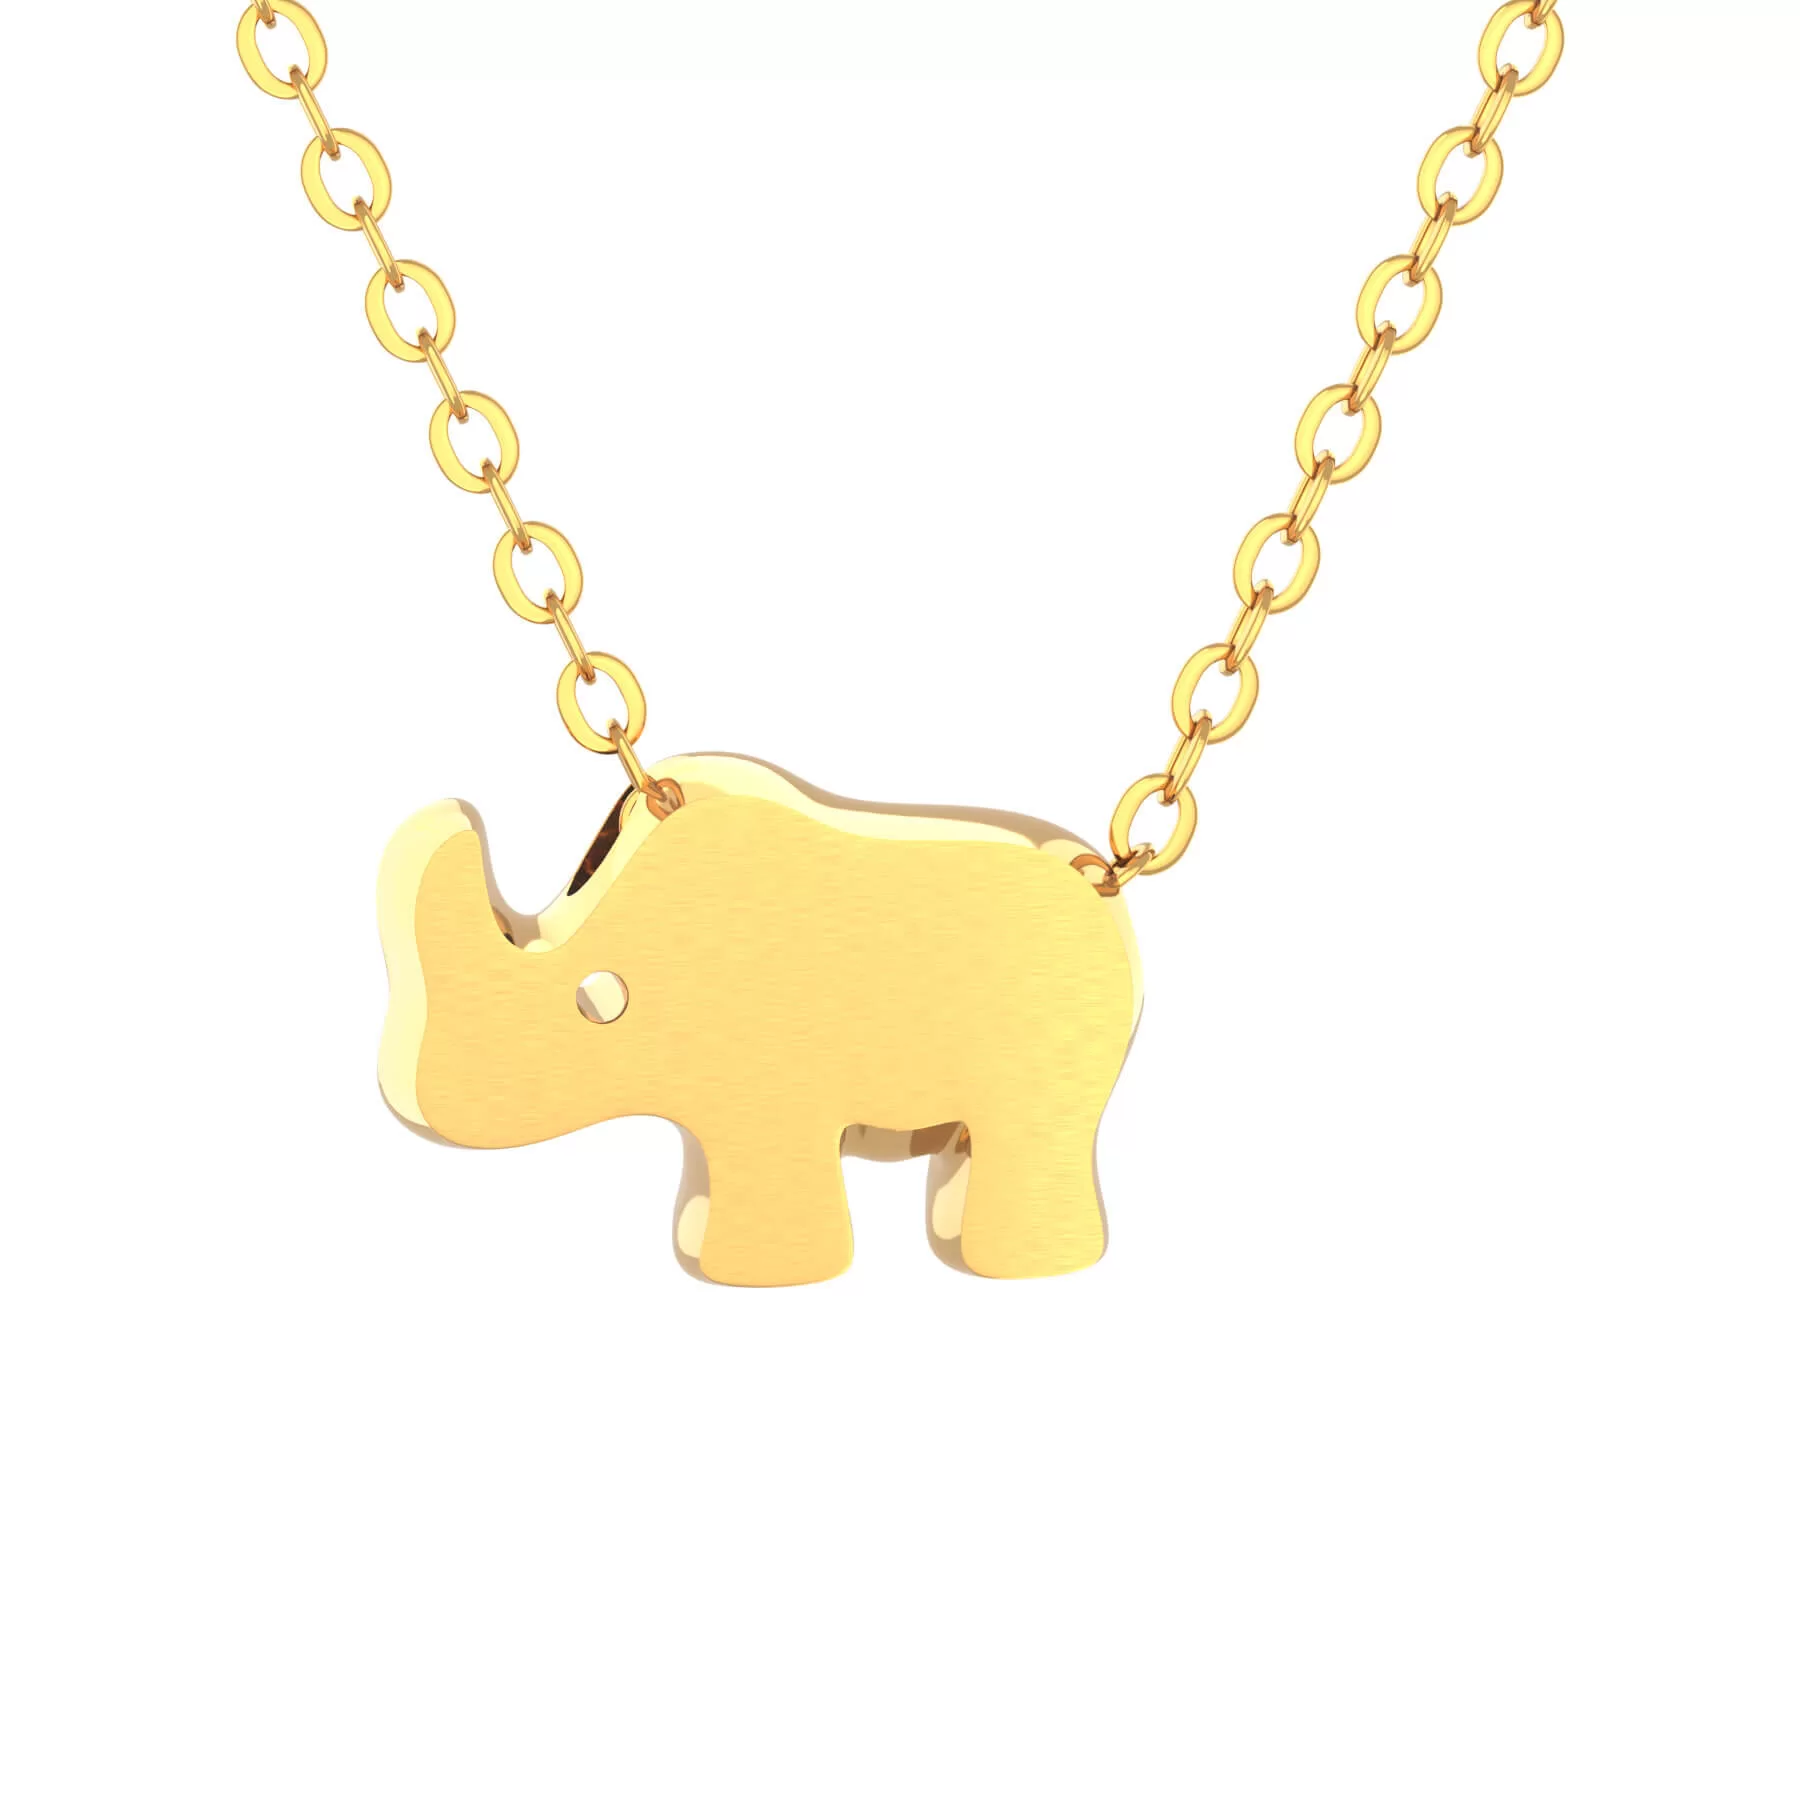 rhino necklace gold